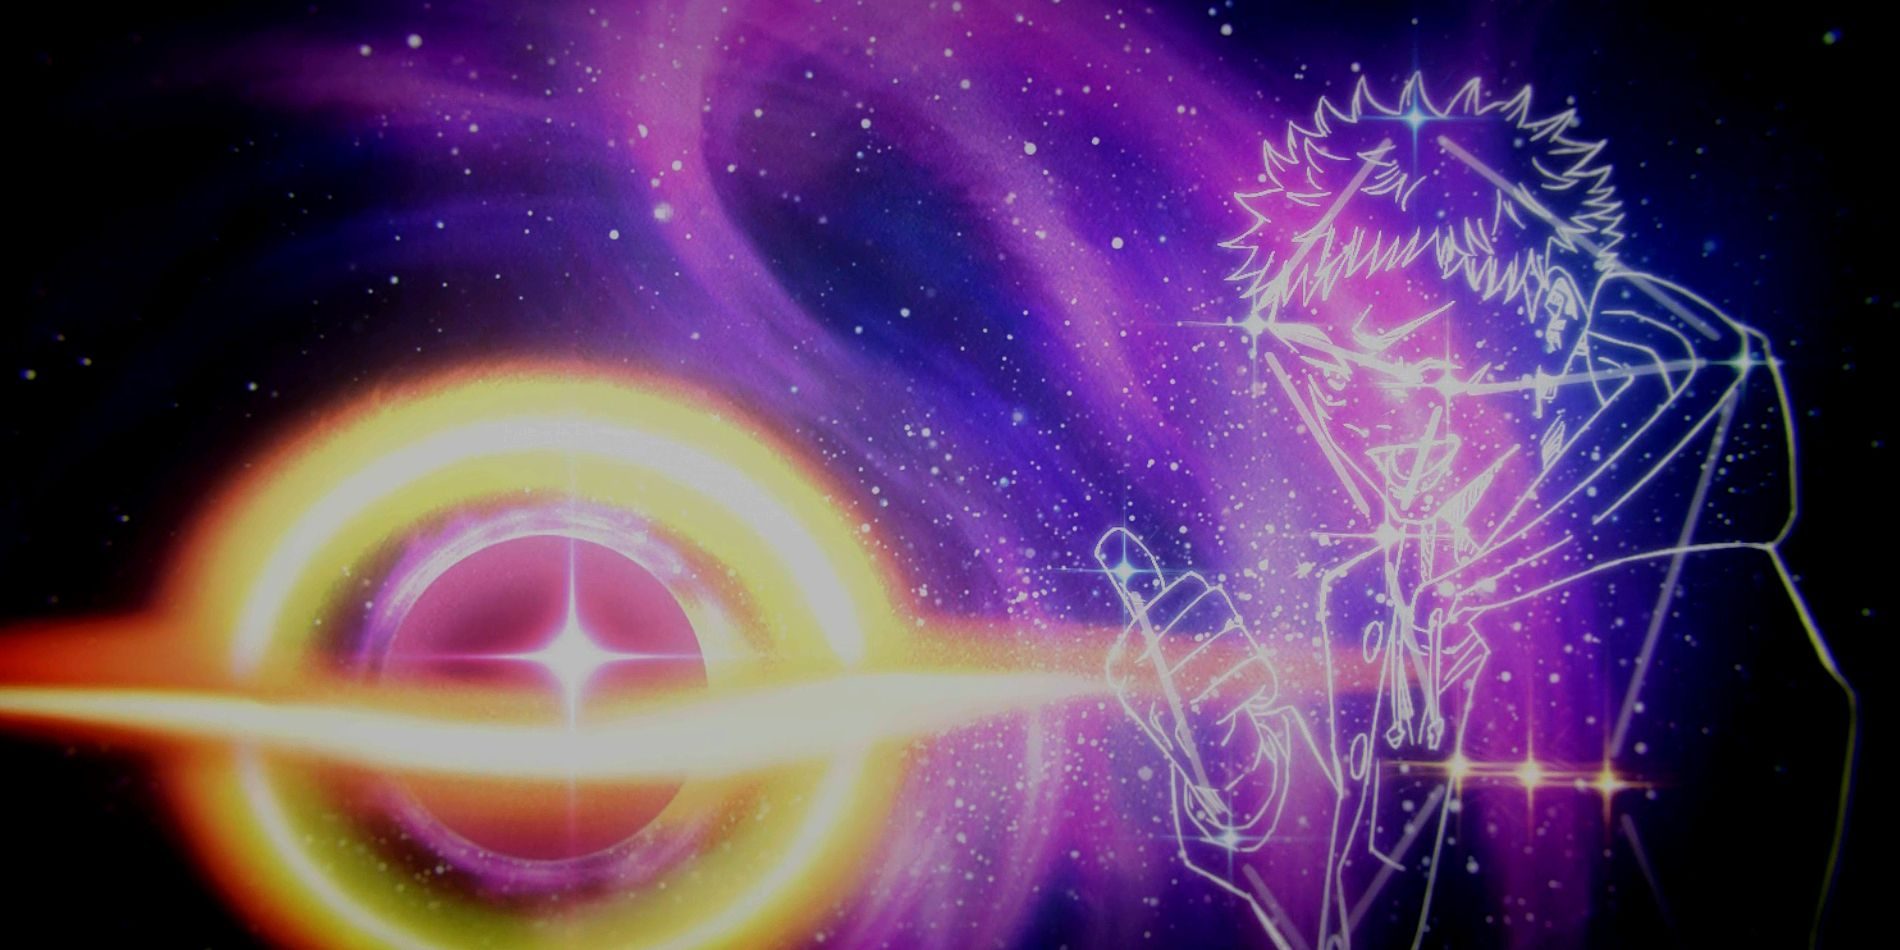 Screenshots from Jujutsu Kaisen season 2 anime episode Right and Wrong Part 3 showing the battle between the Yuji, Todo, and Mahito.